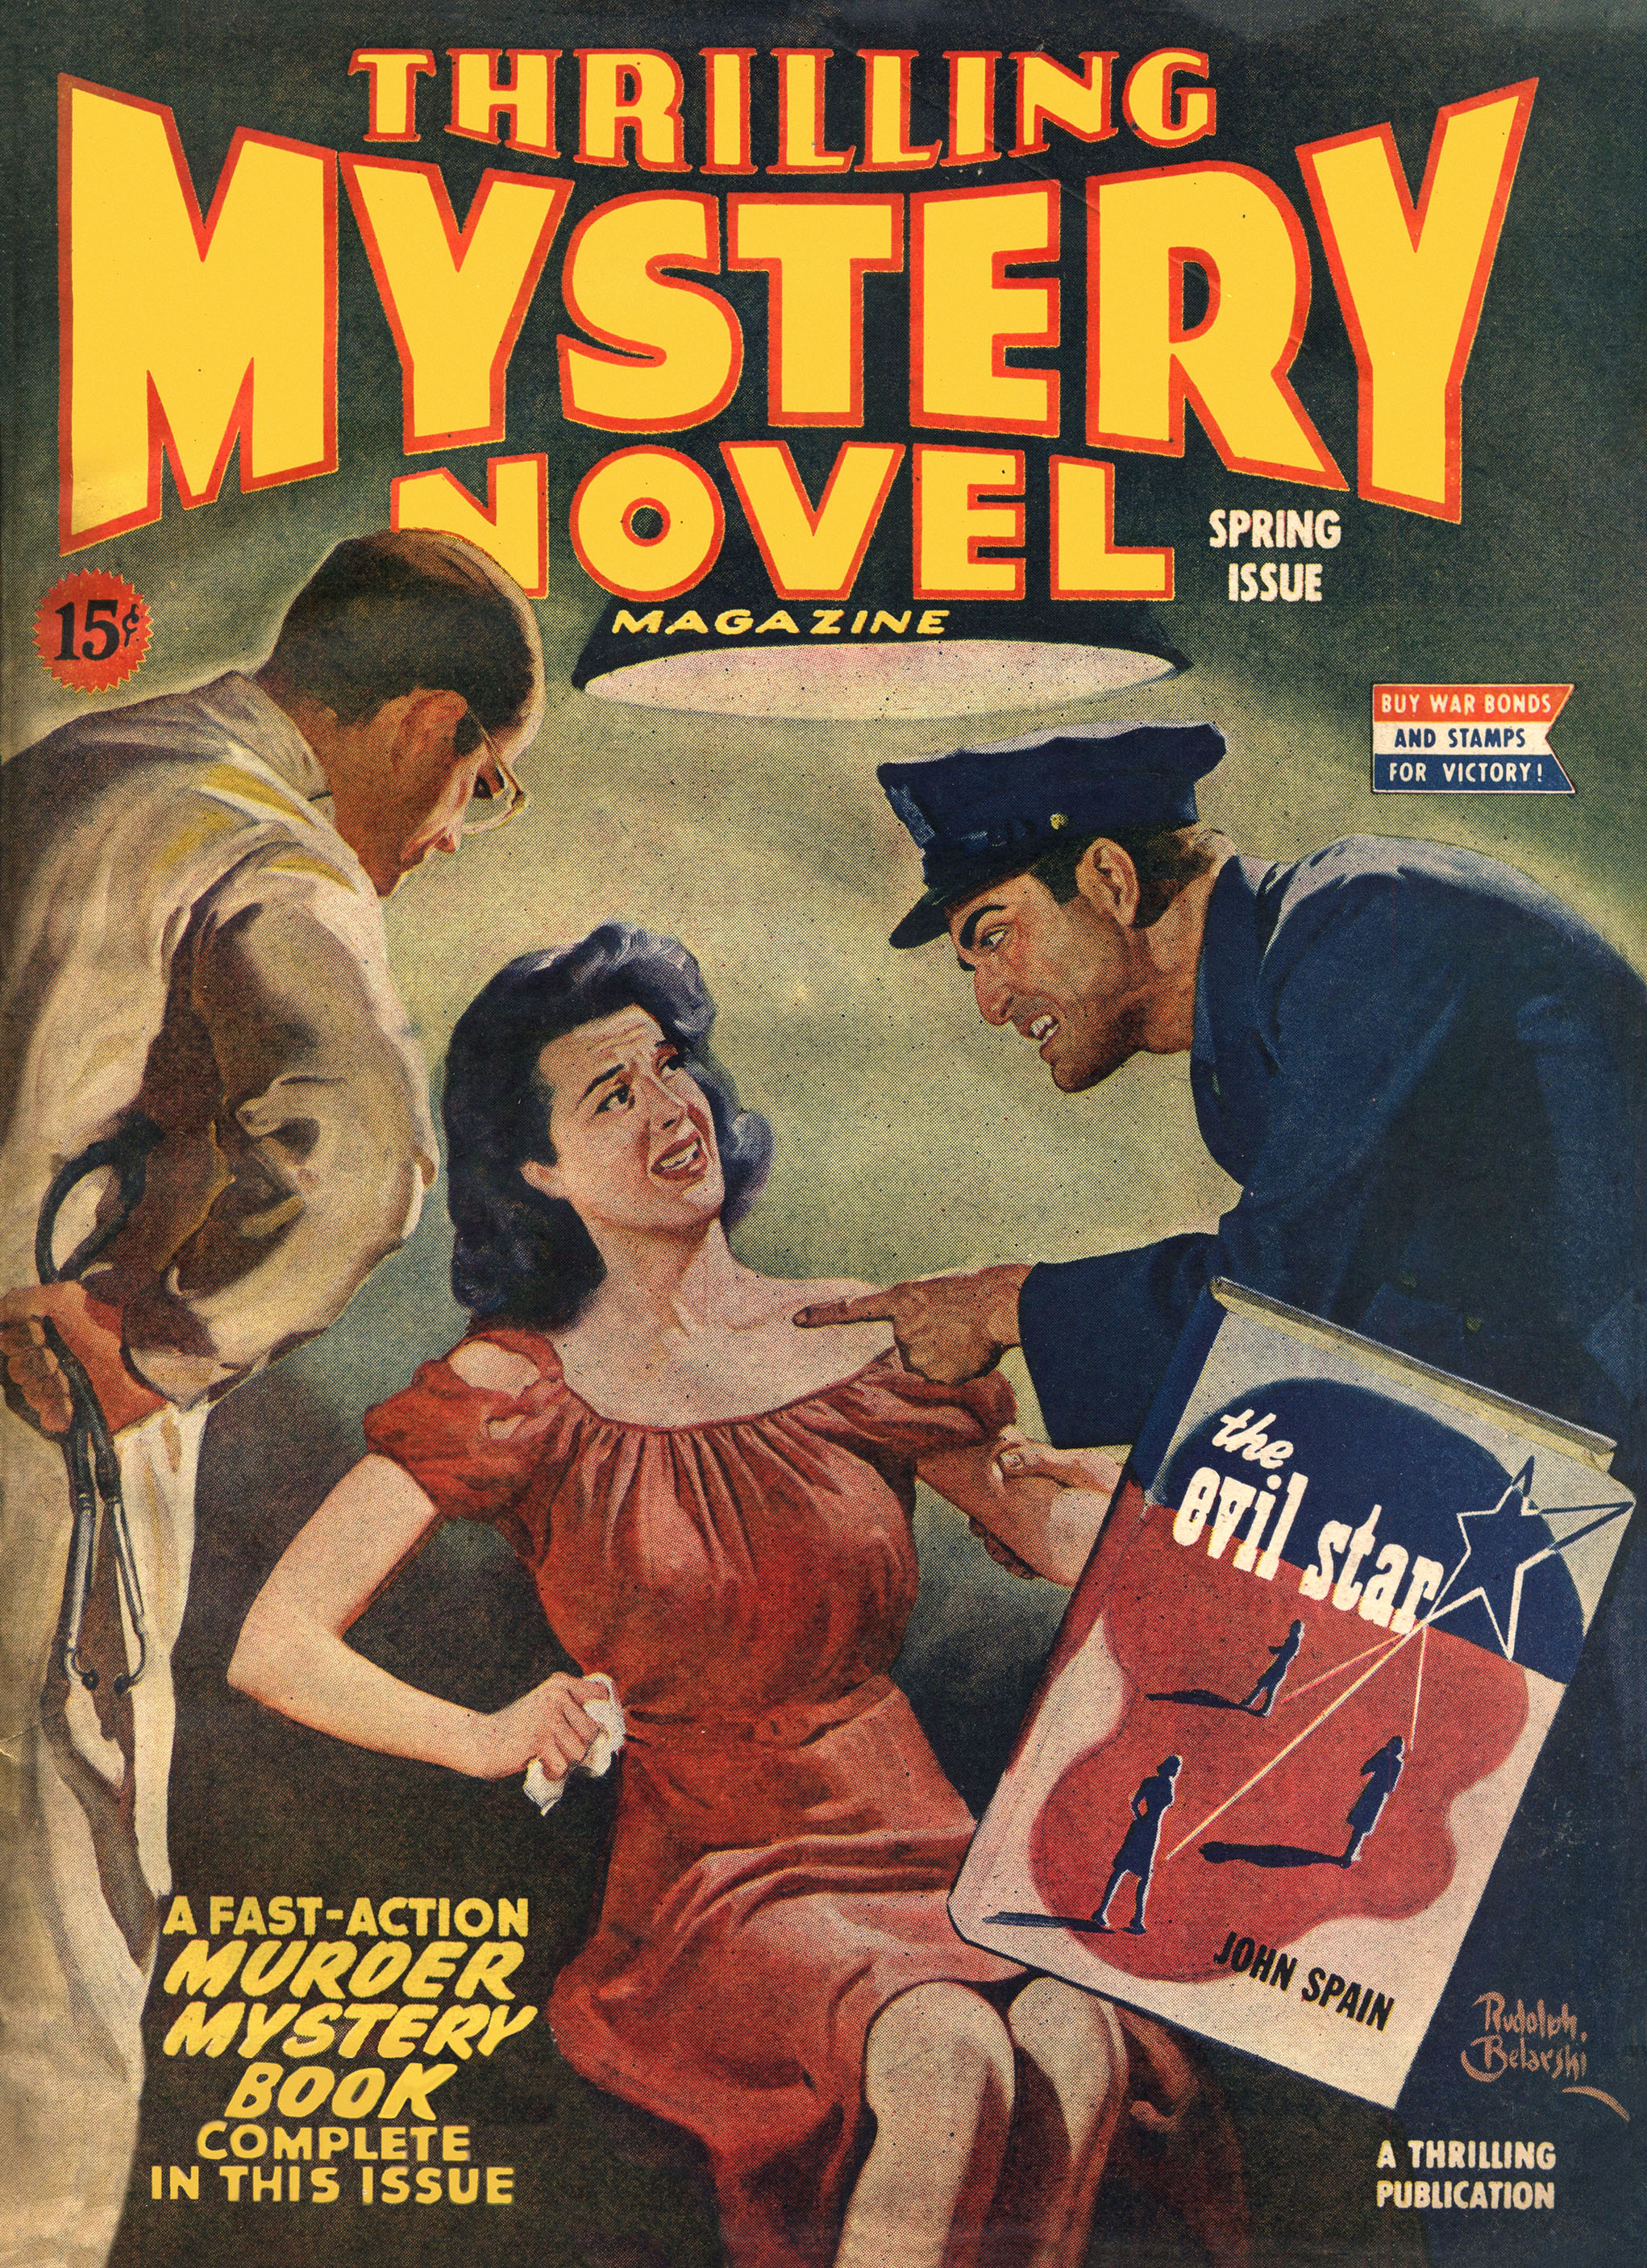 Thrilling Mystery Novel 1945 spring